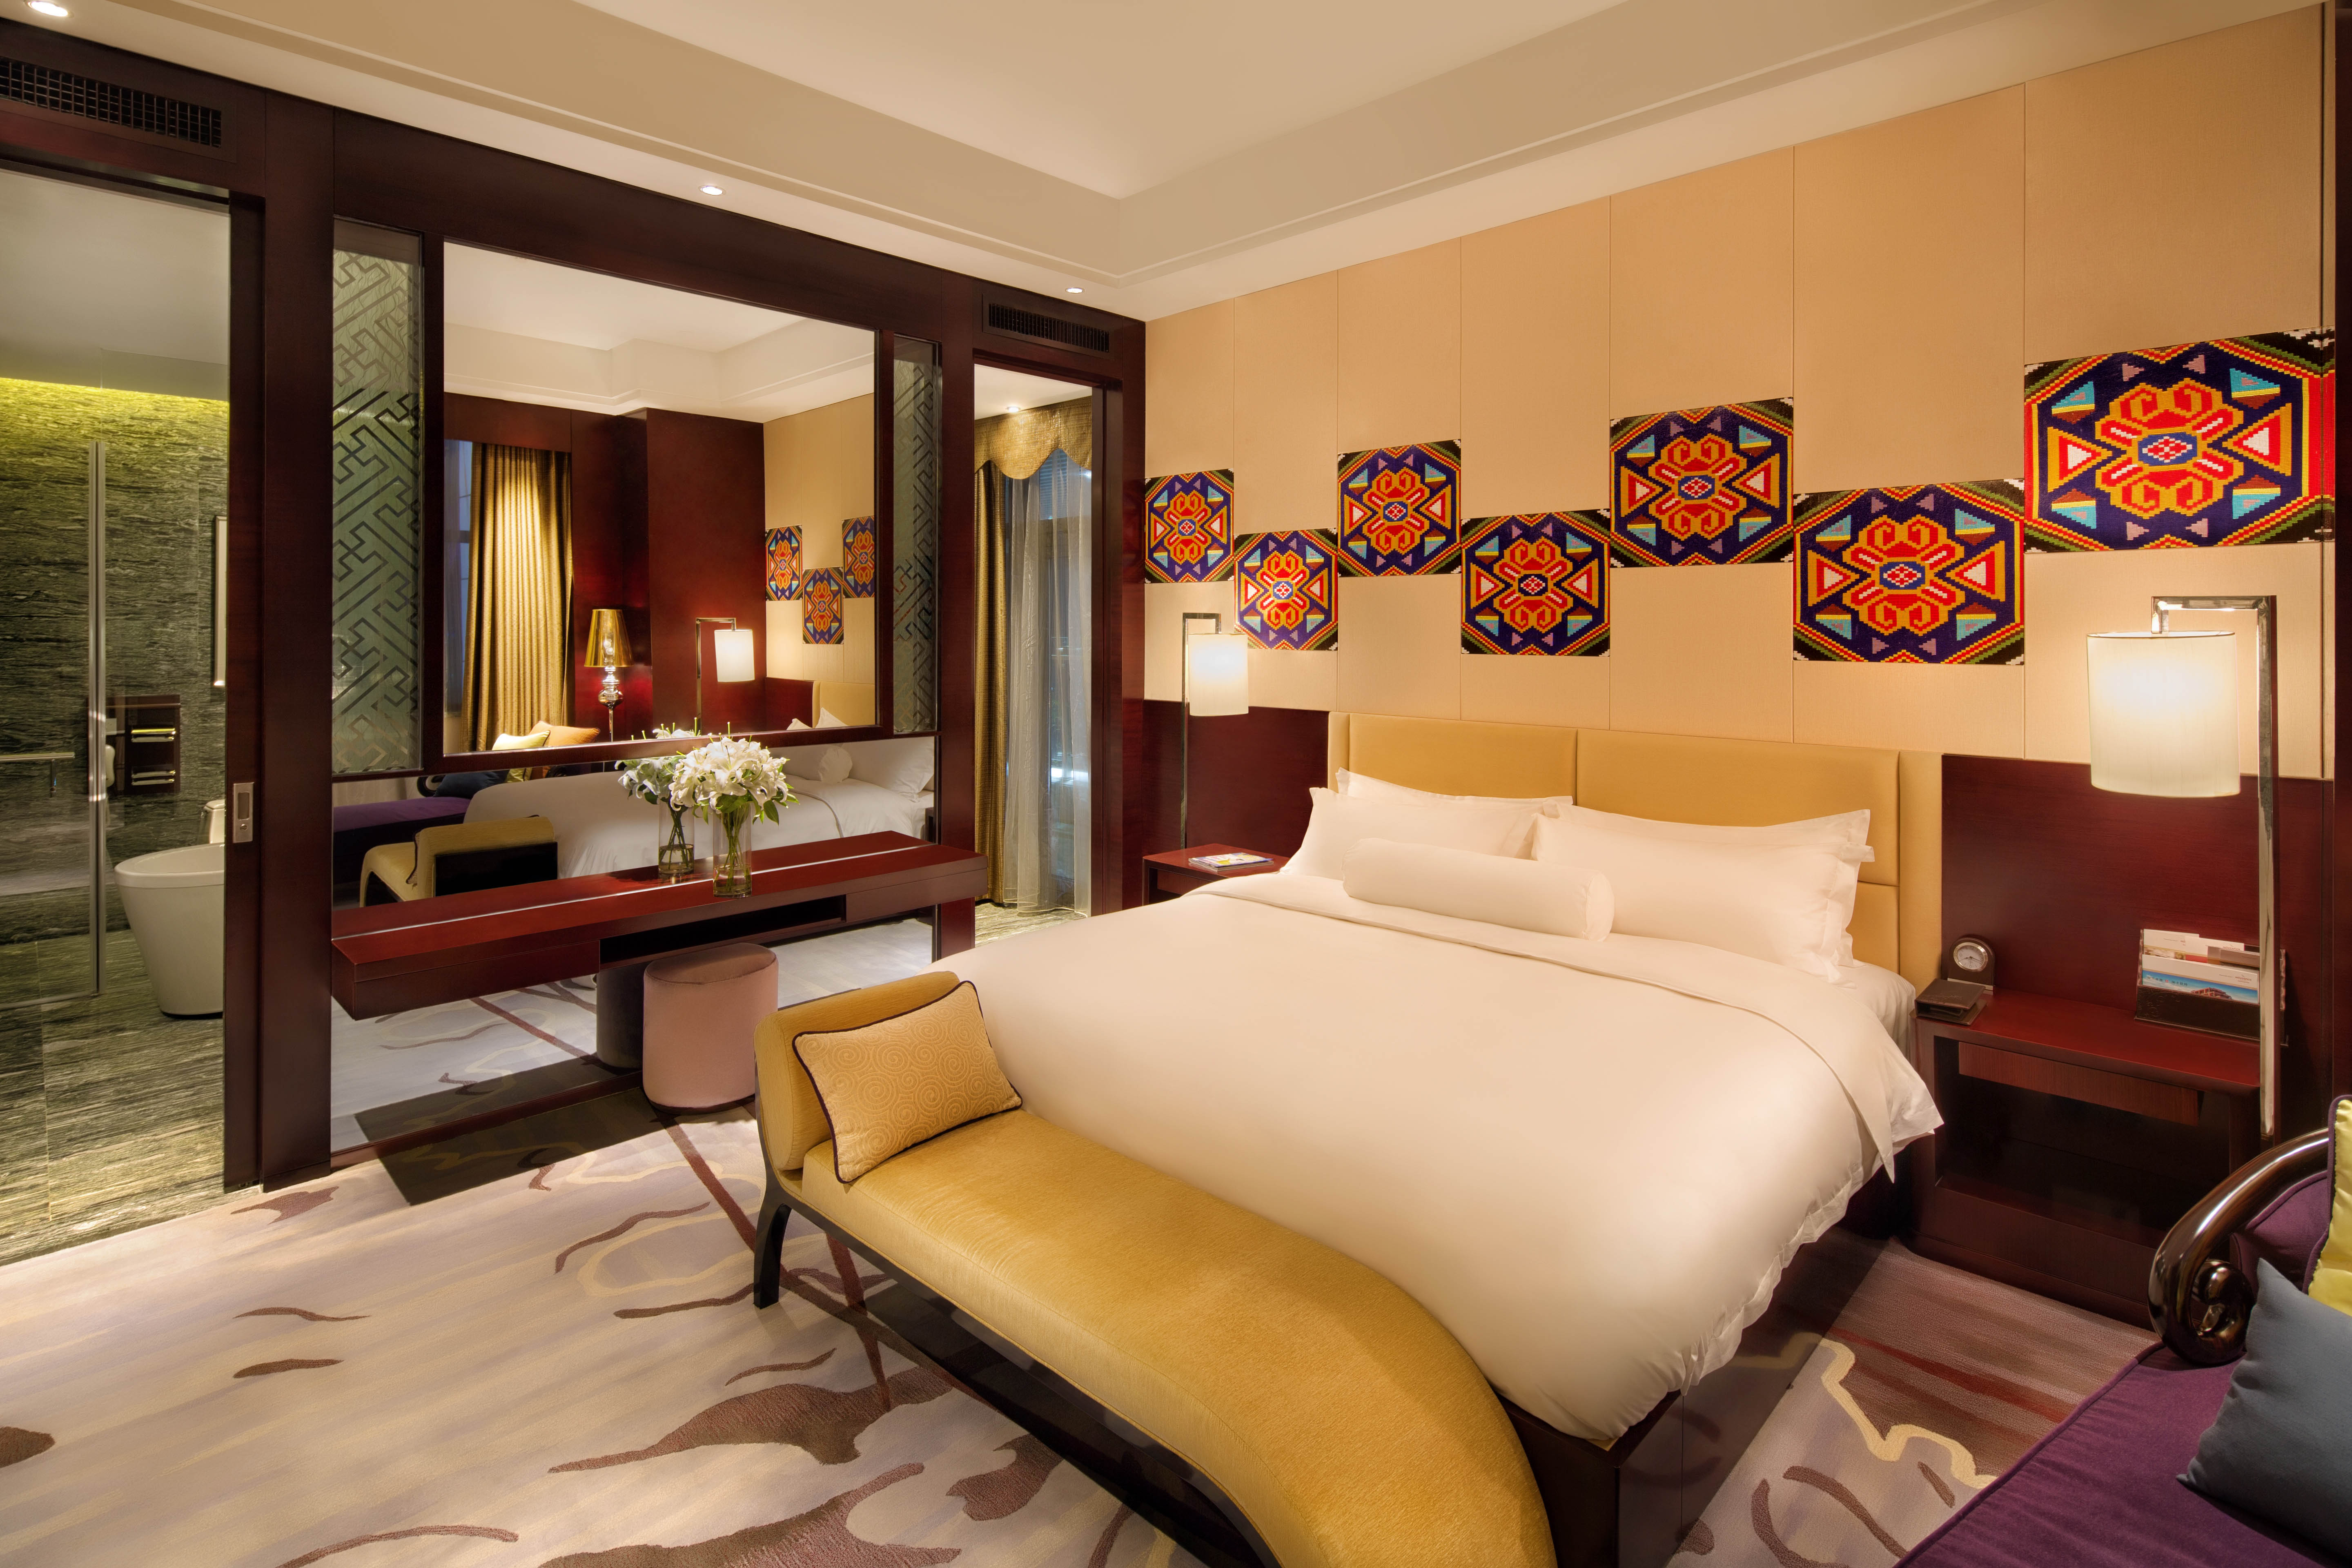 china hotel room bedroom furniture set